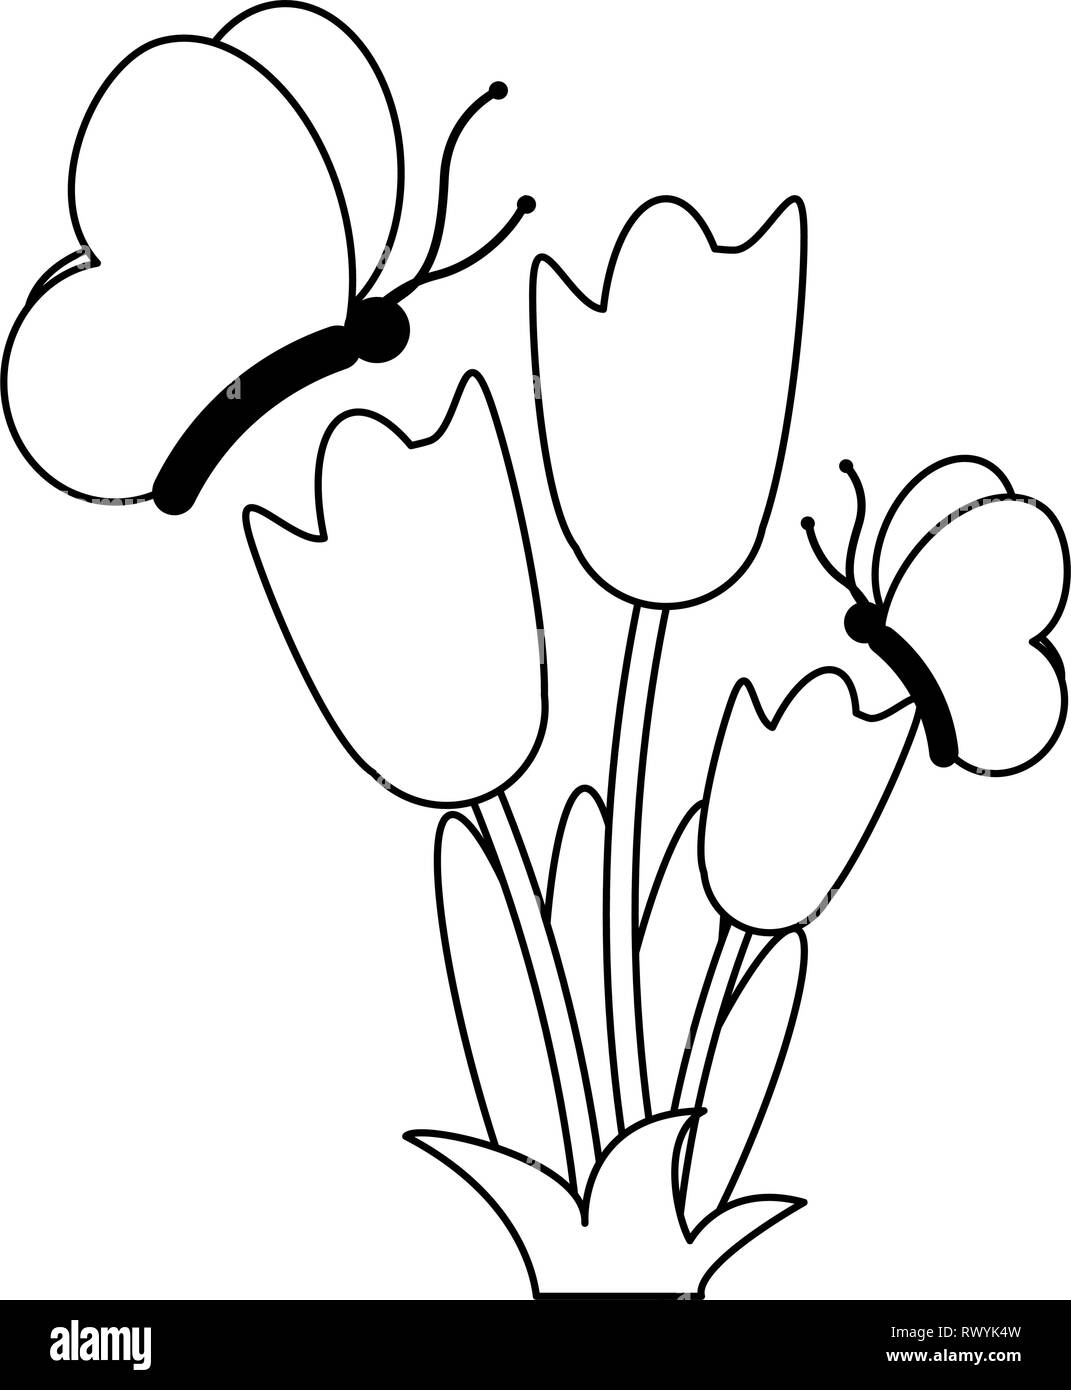 Cartoon Flowers Black And White - Carinewbi